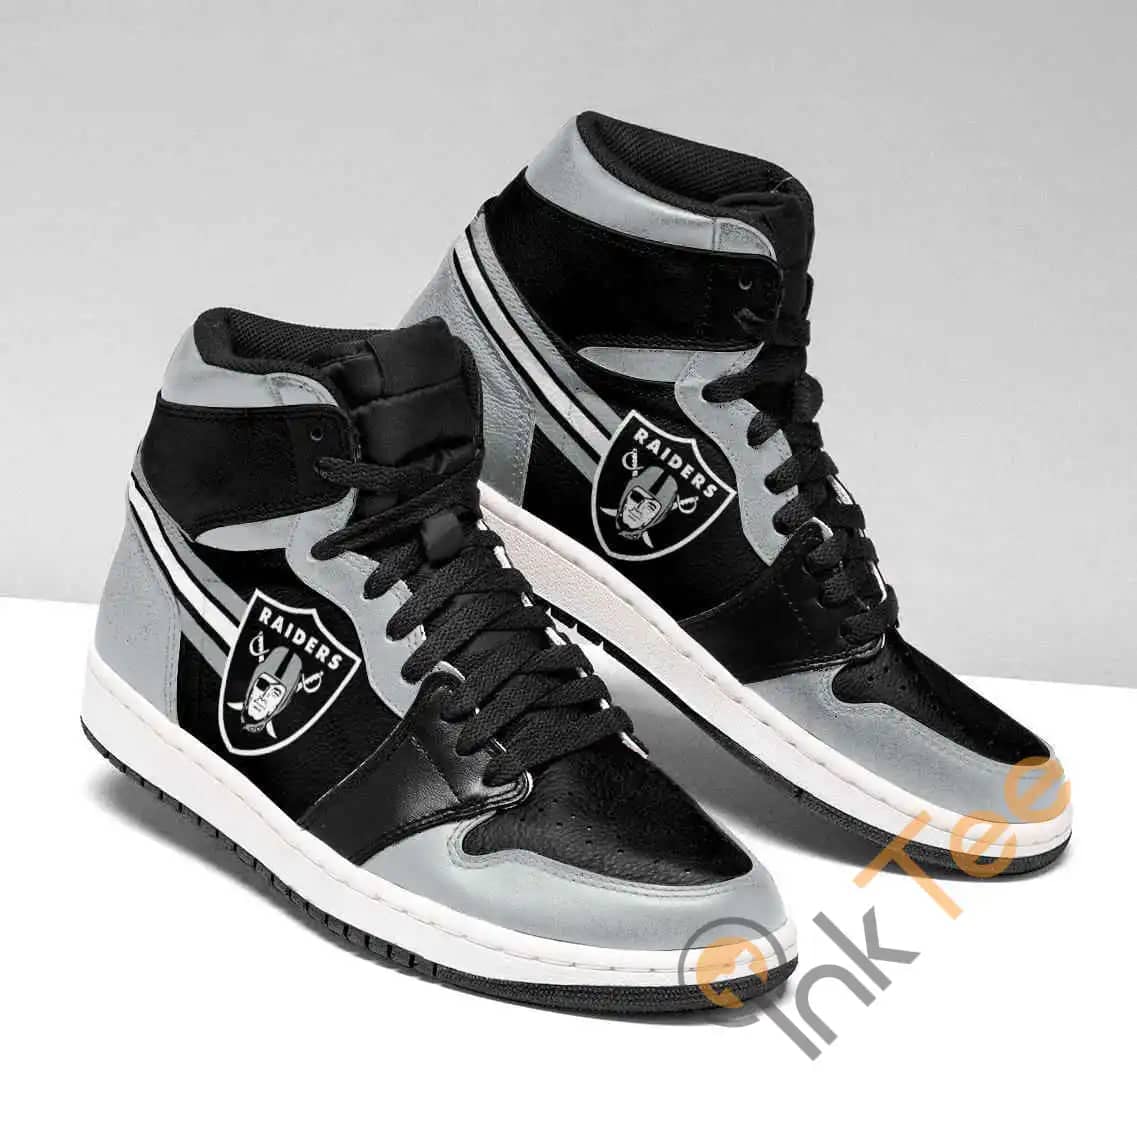 Oakland Raiders Nfl Air Jordan Shoes